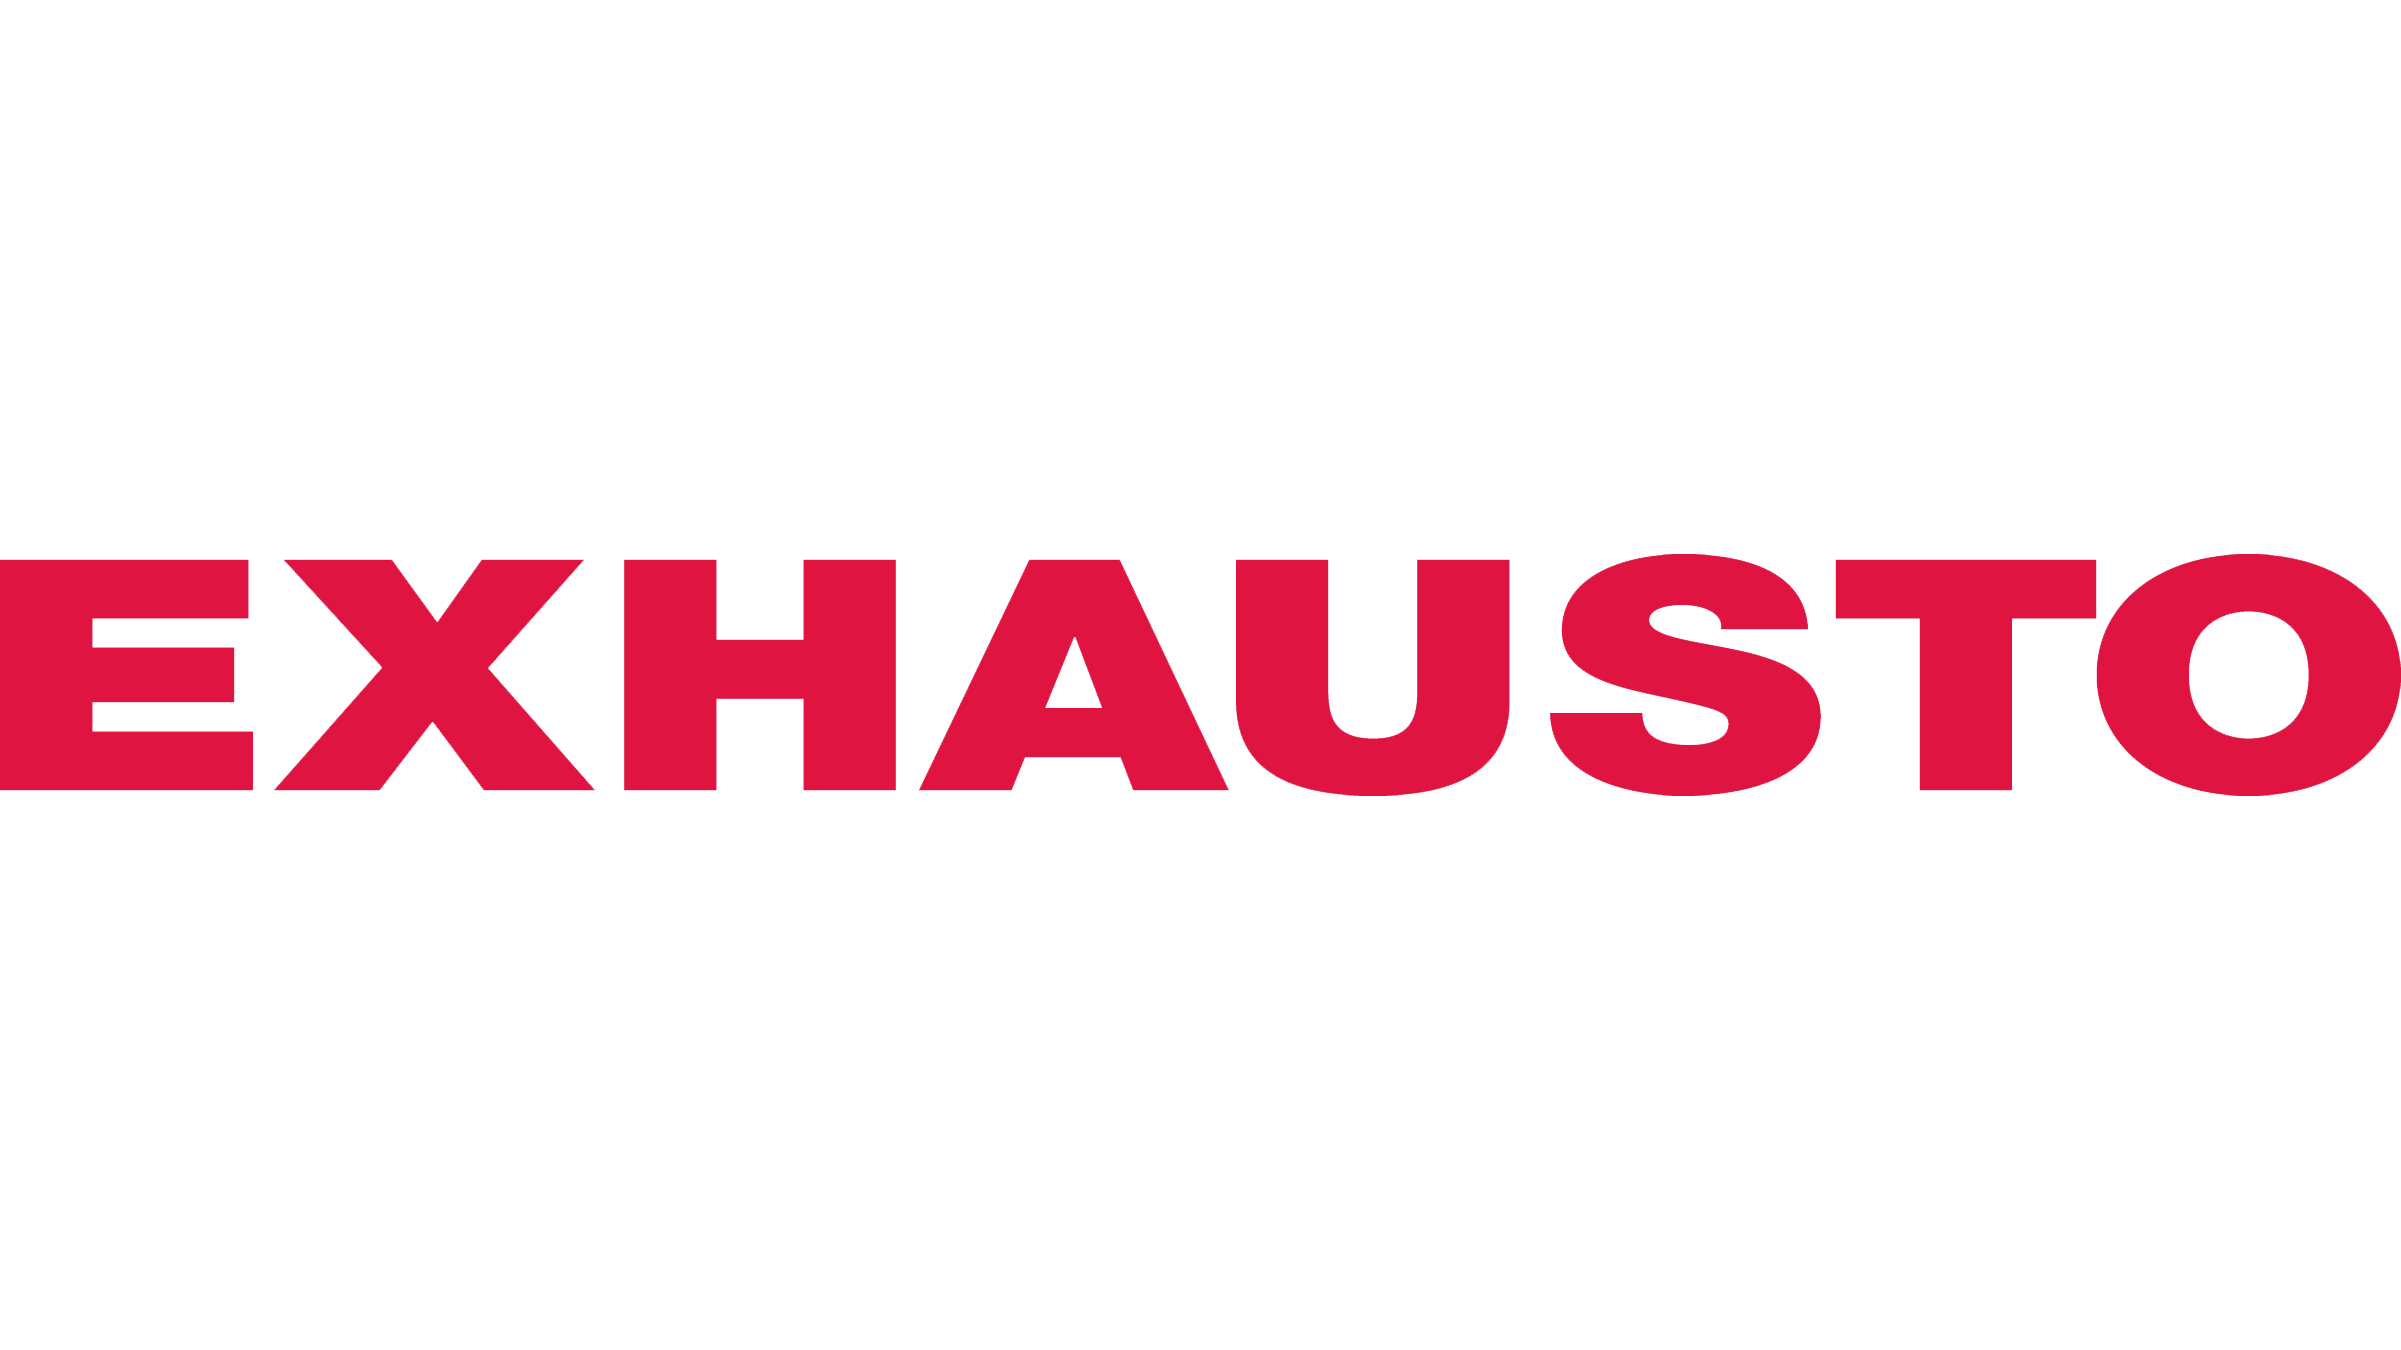 The logo of Exhausto